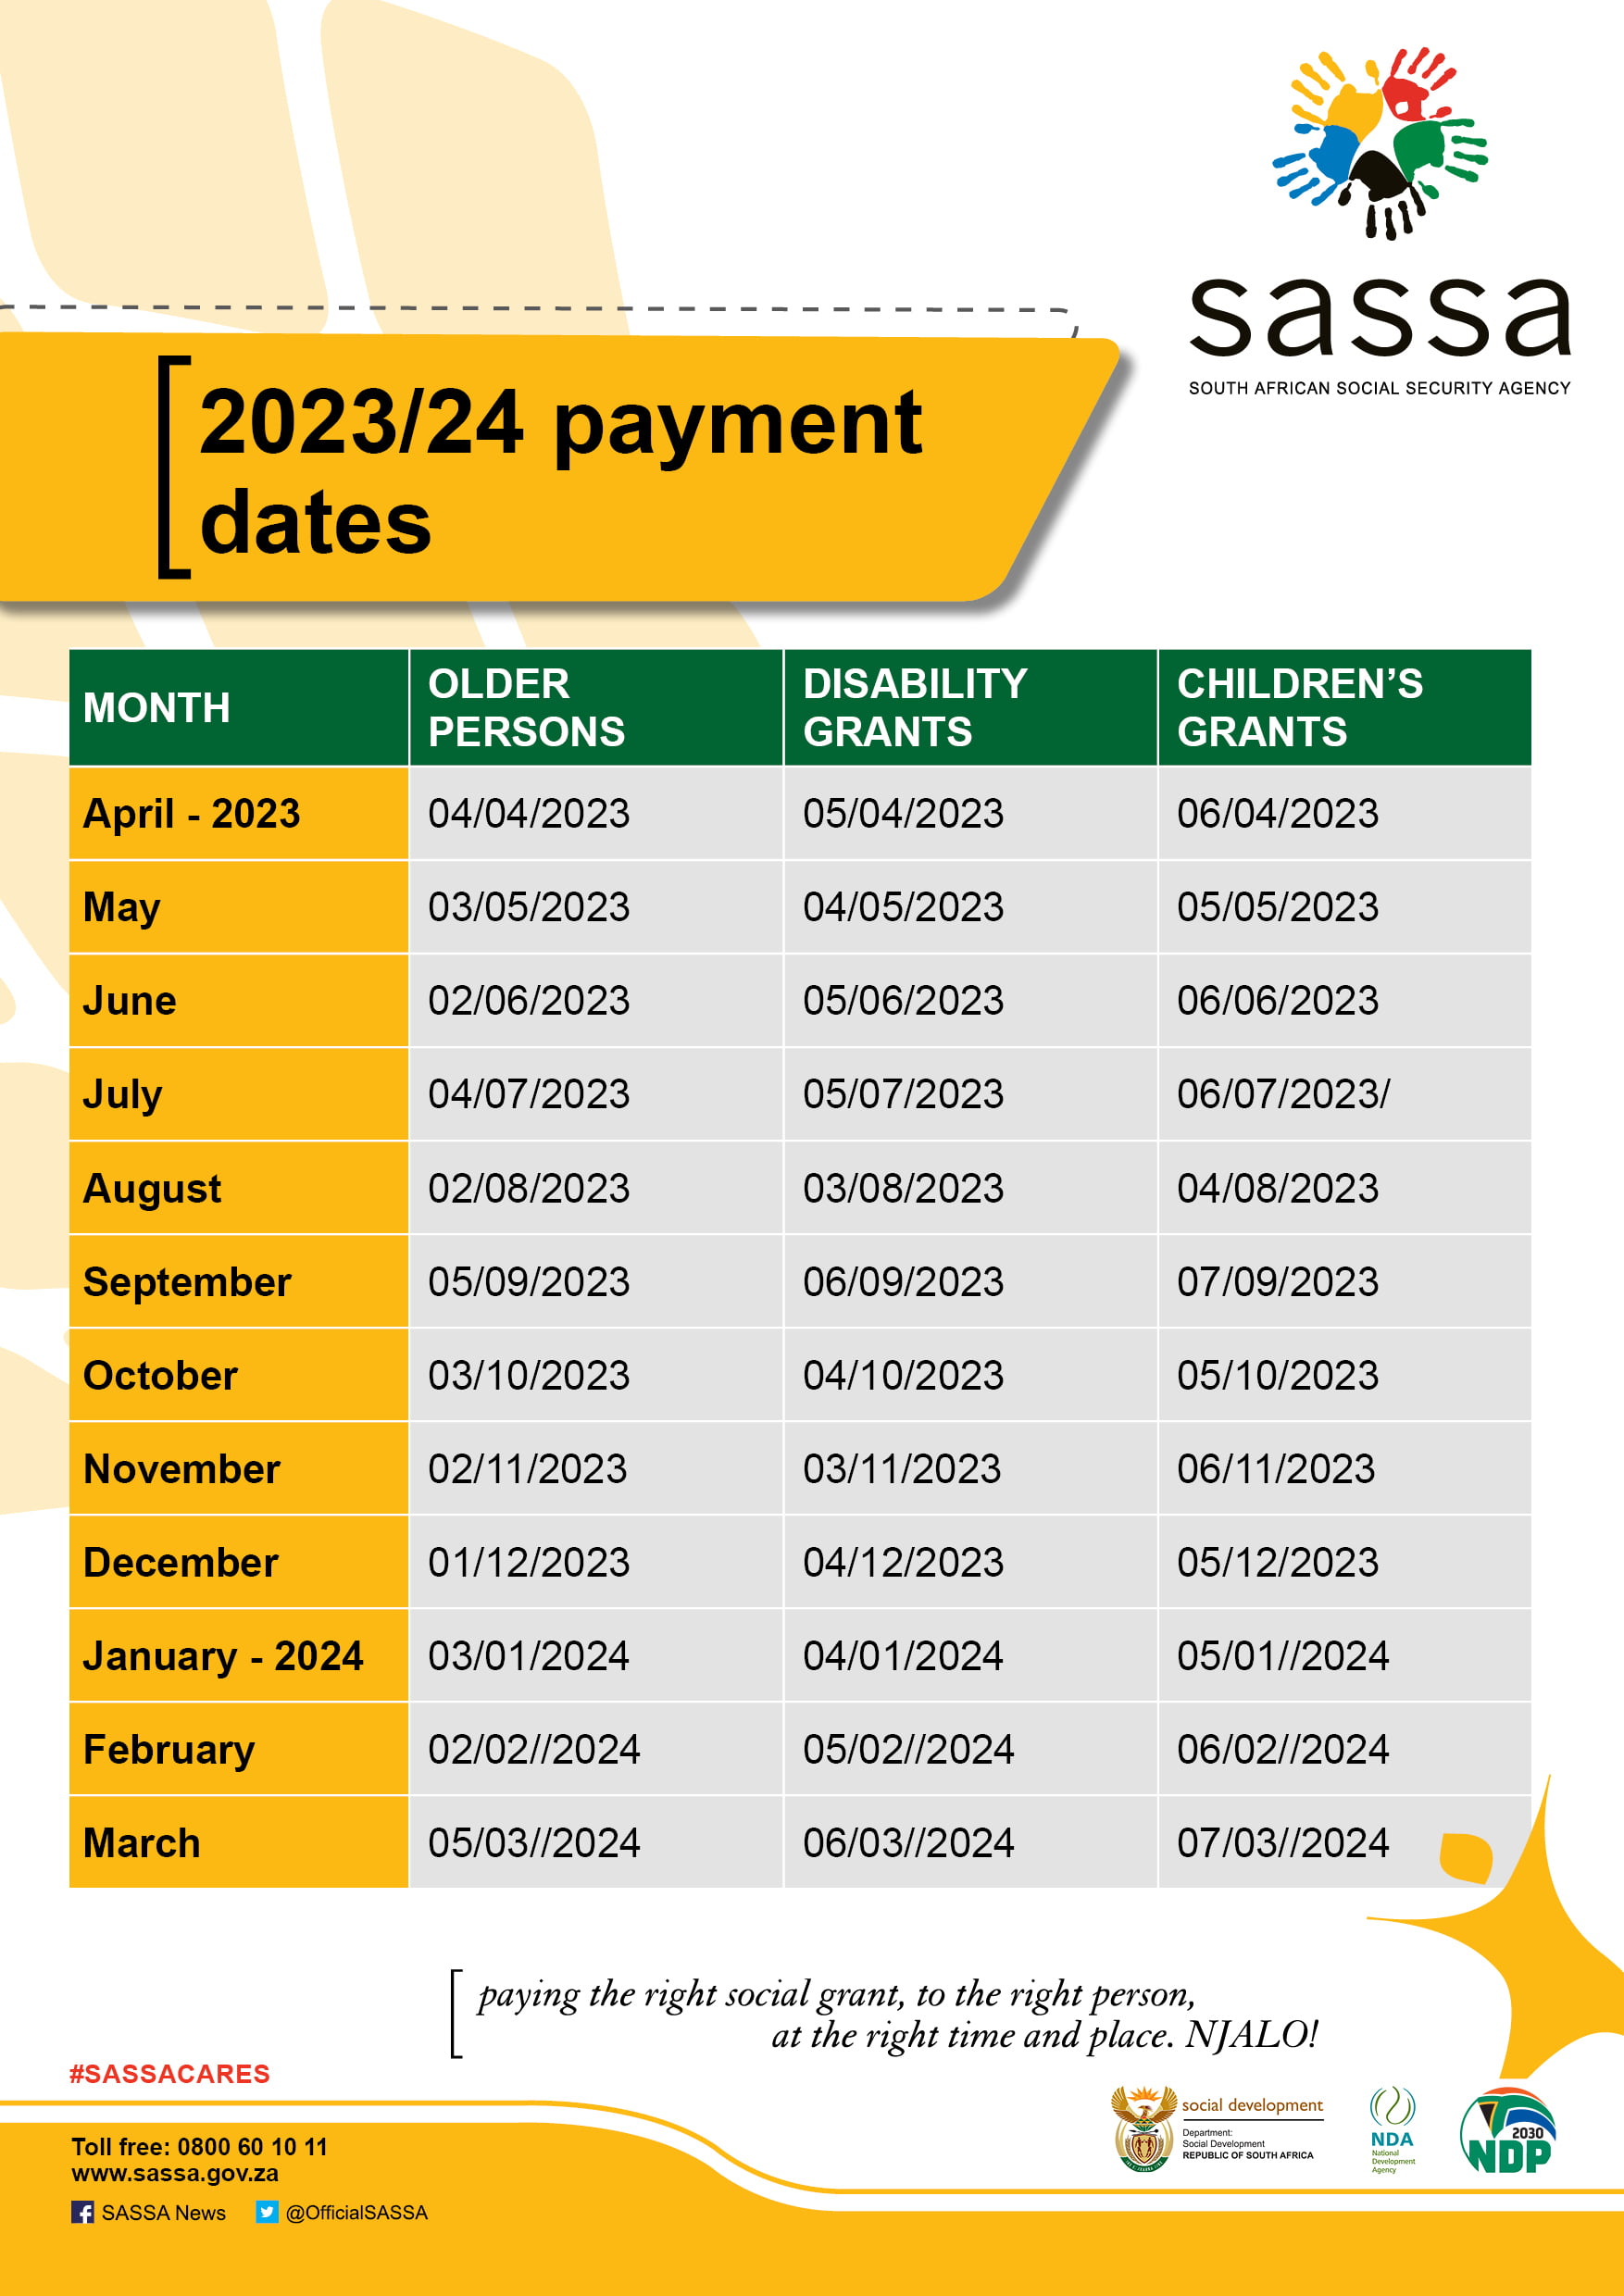 SASSA Payment Schedule for 2023/2024